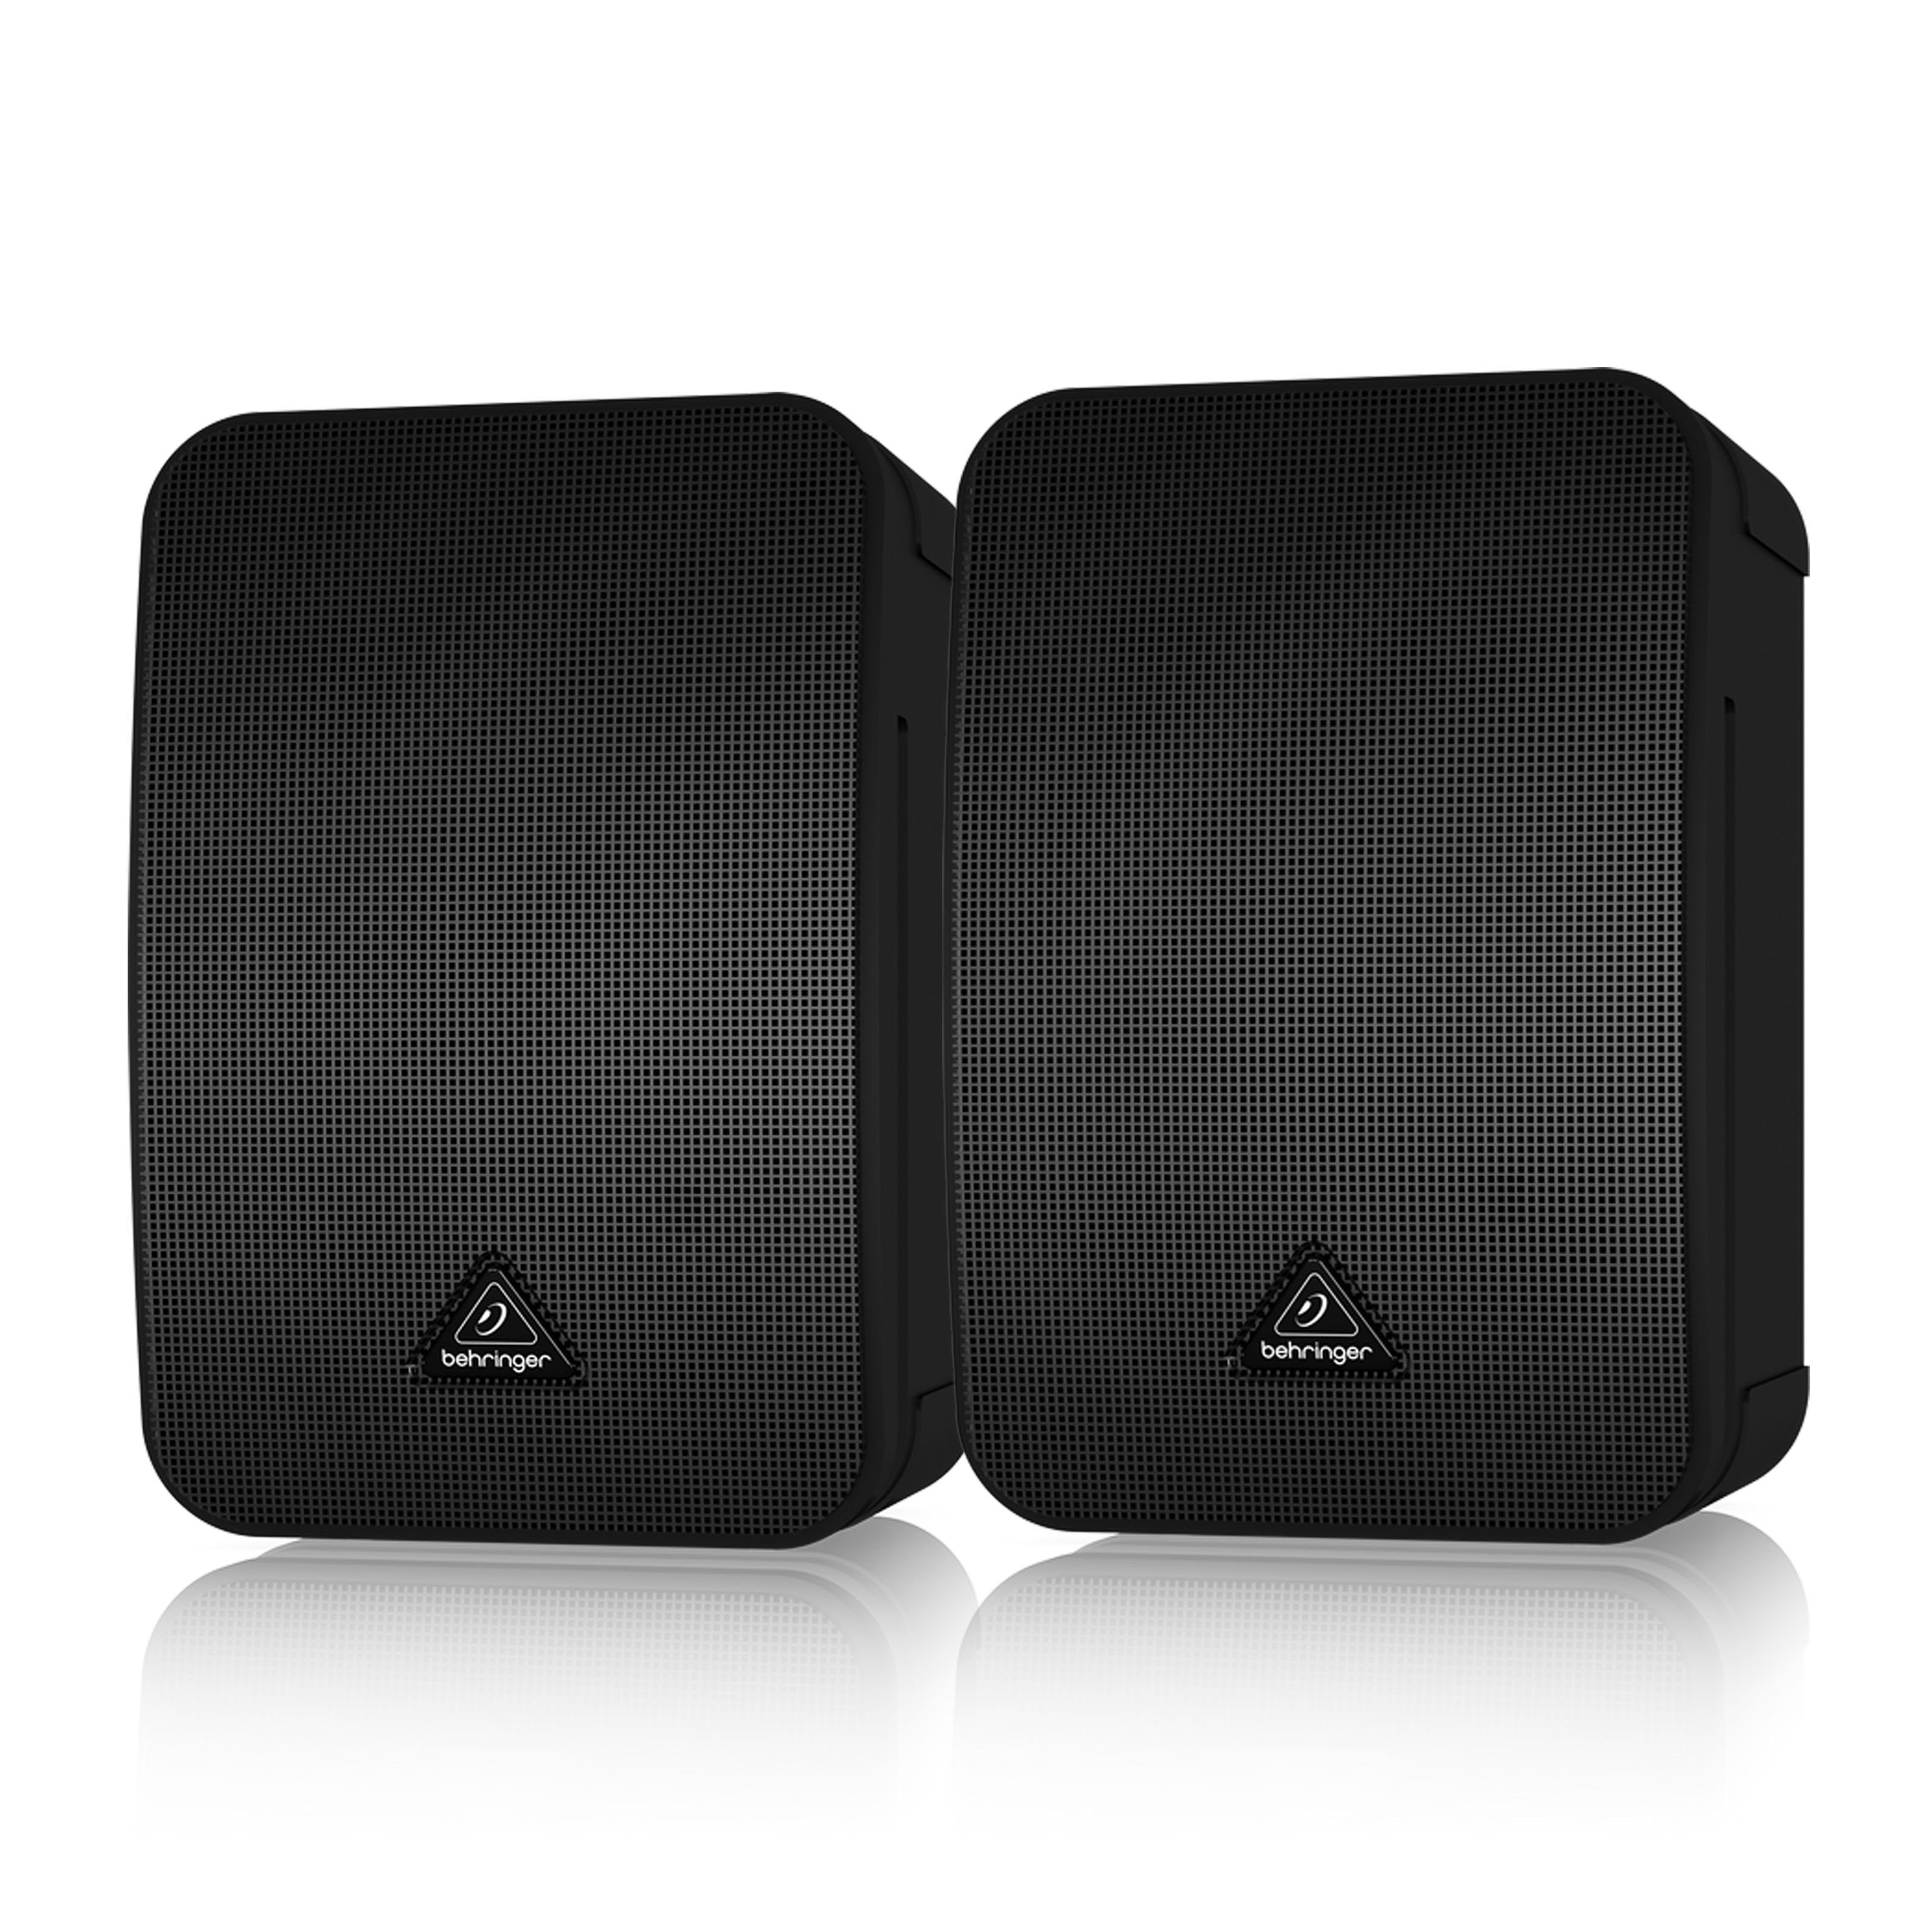 ultra - (1C-BK black Passiver Behringer Kleinlautsprech) Lautsprecher Speakers compact, Monitor